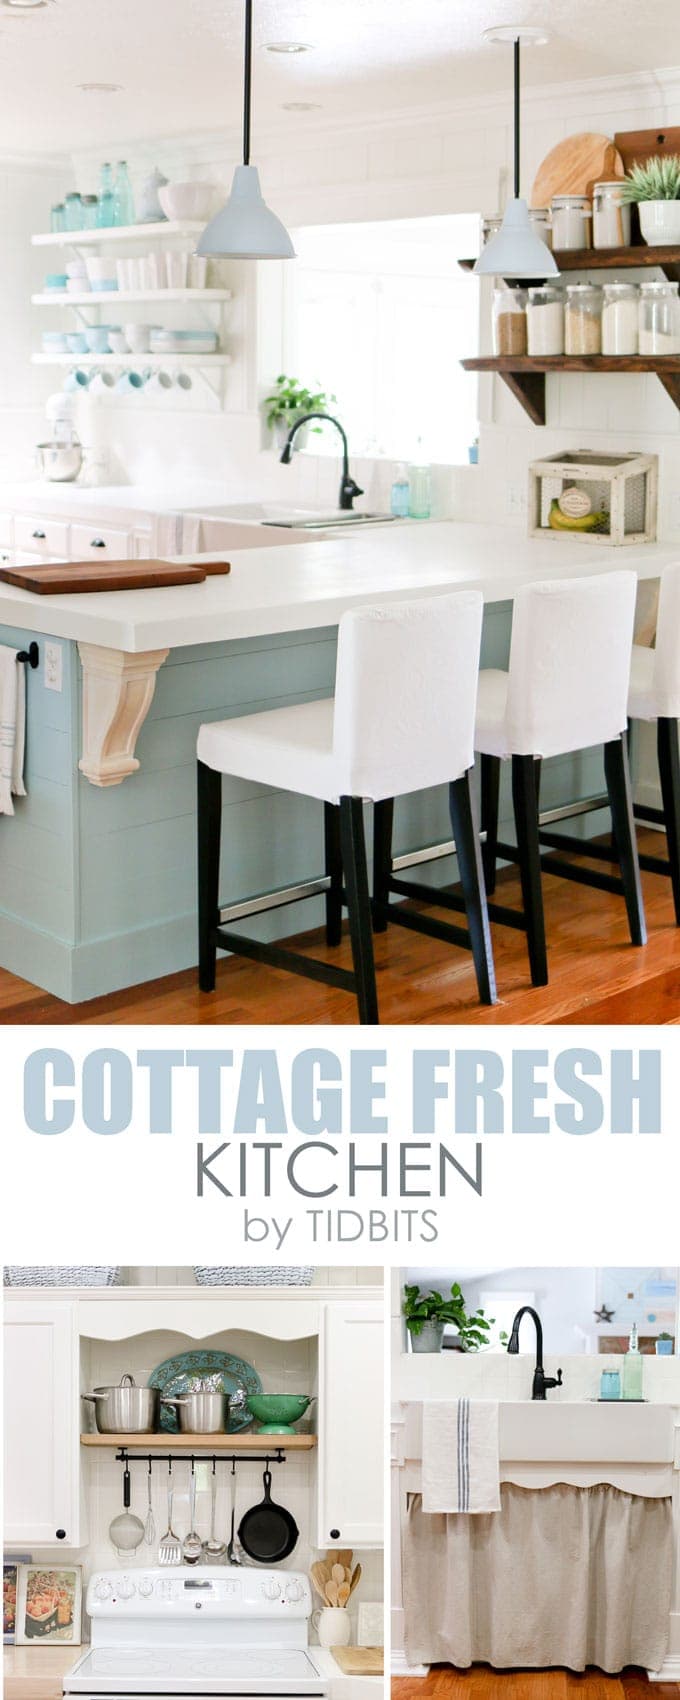 Cottage Fresh Kitchen, by TIDBITS